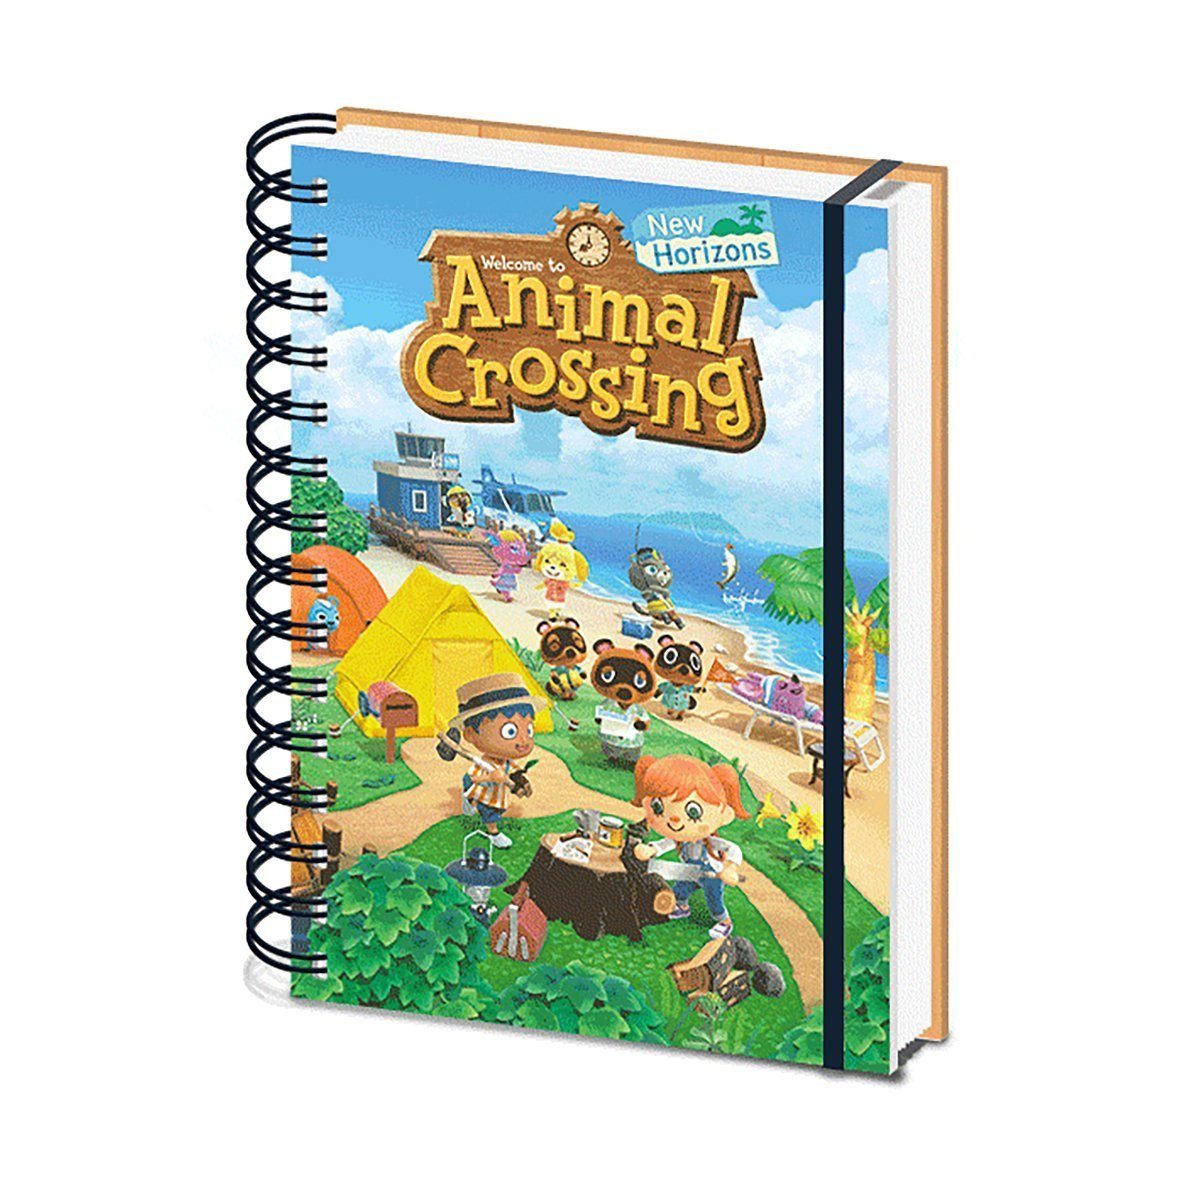 Horizons 3D PYRAMID Crossing New Animal Cover Notizbuch Notizbuch